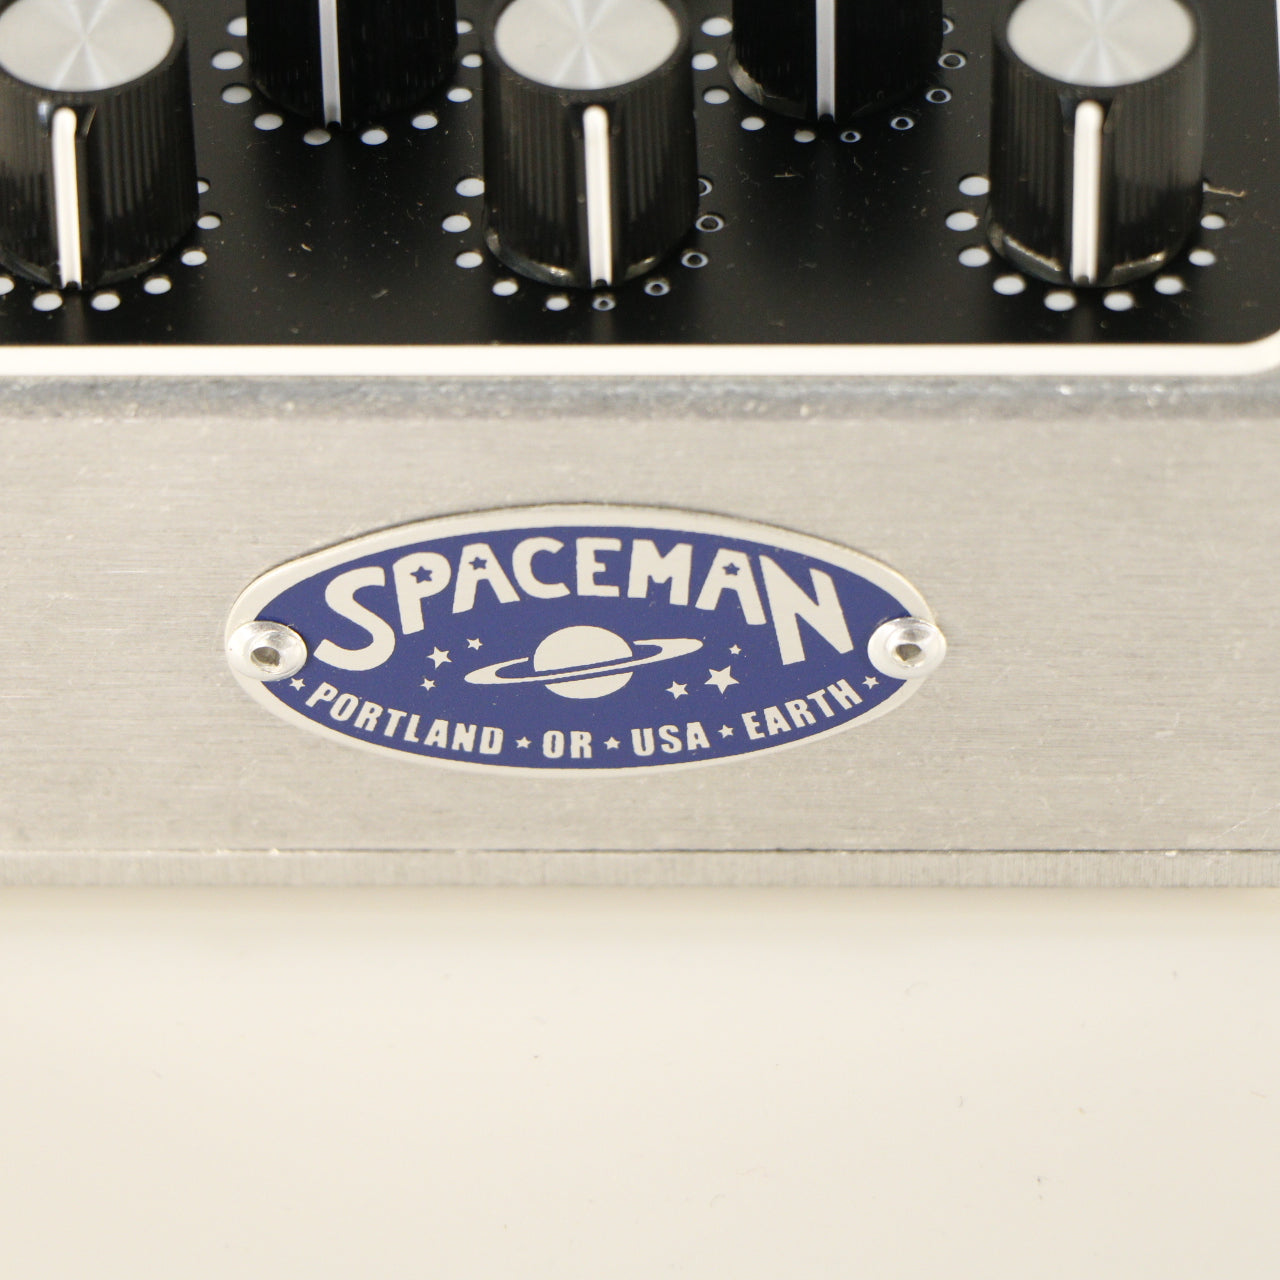 Spaceman Ixion Optical Compressor